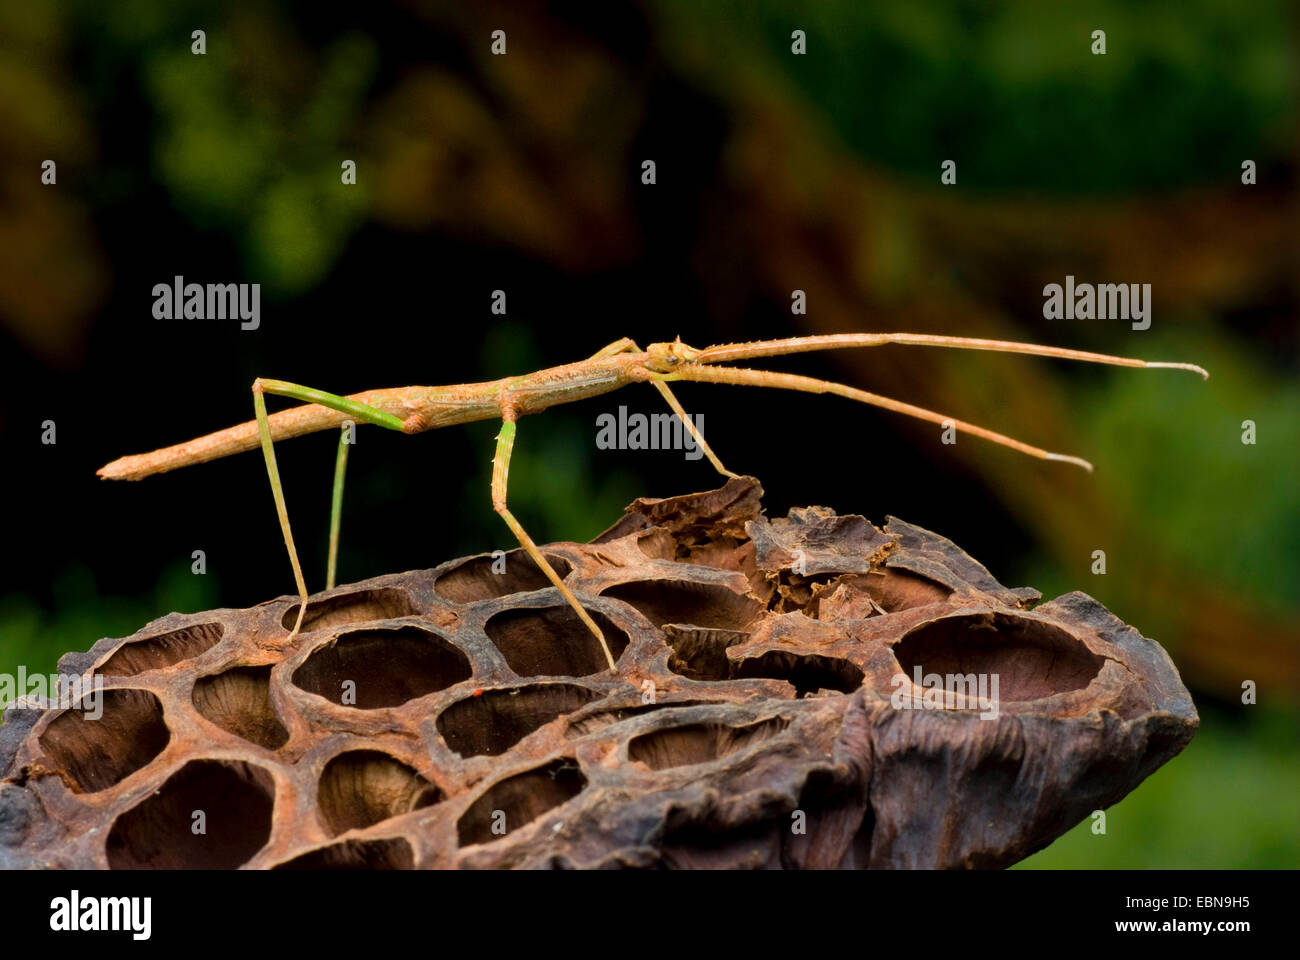 Vietnamese Stick Bug (Ramulus artemis, Baculum artemis), on a seed vessel Stock Photo